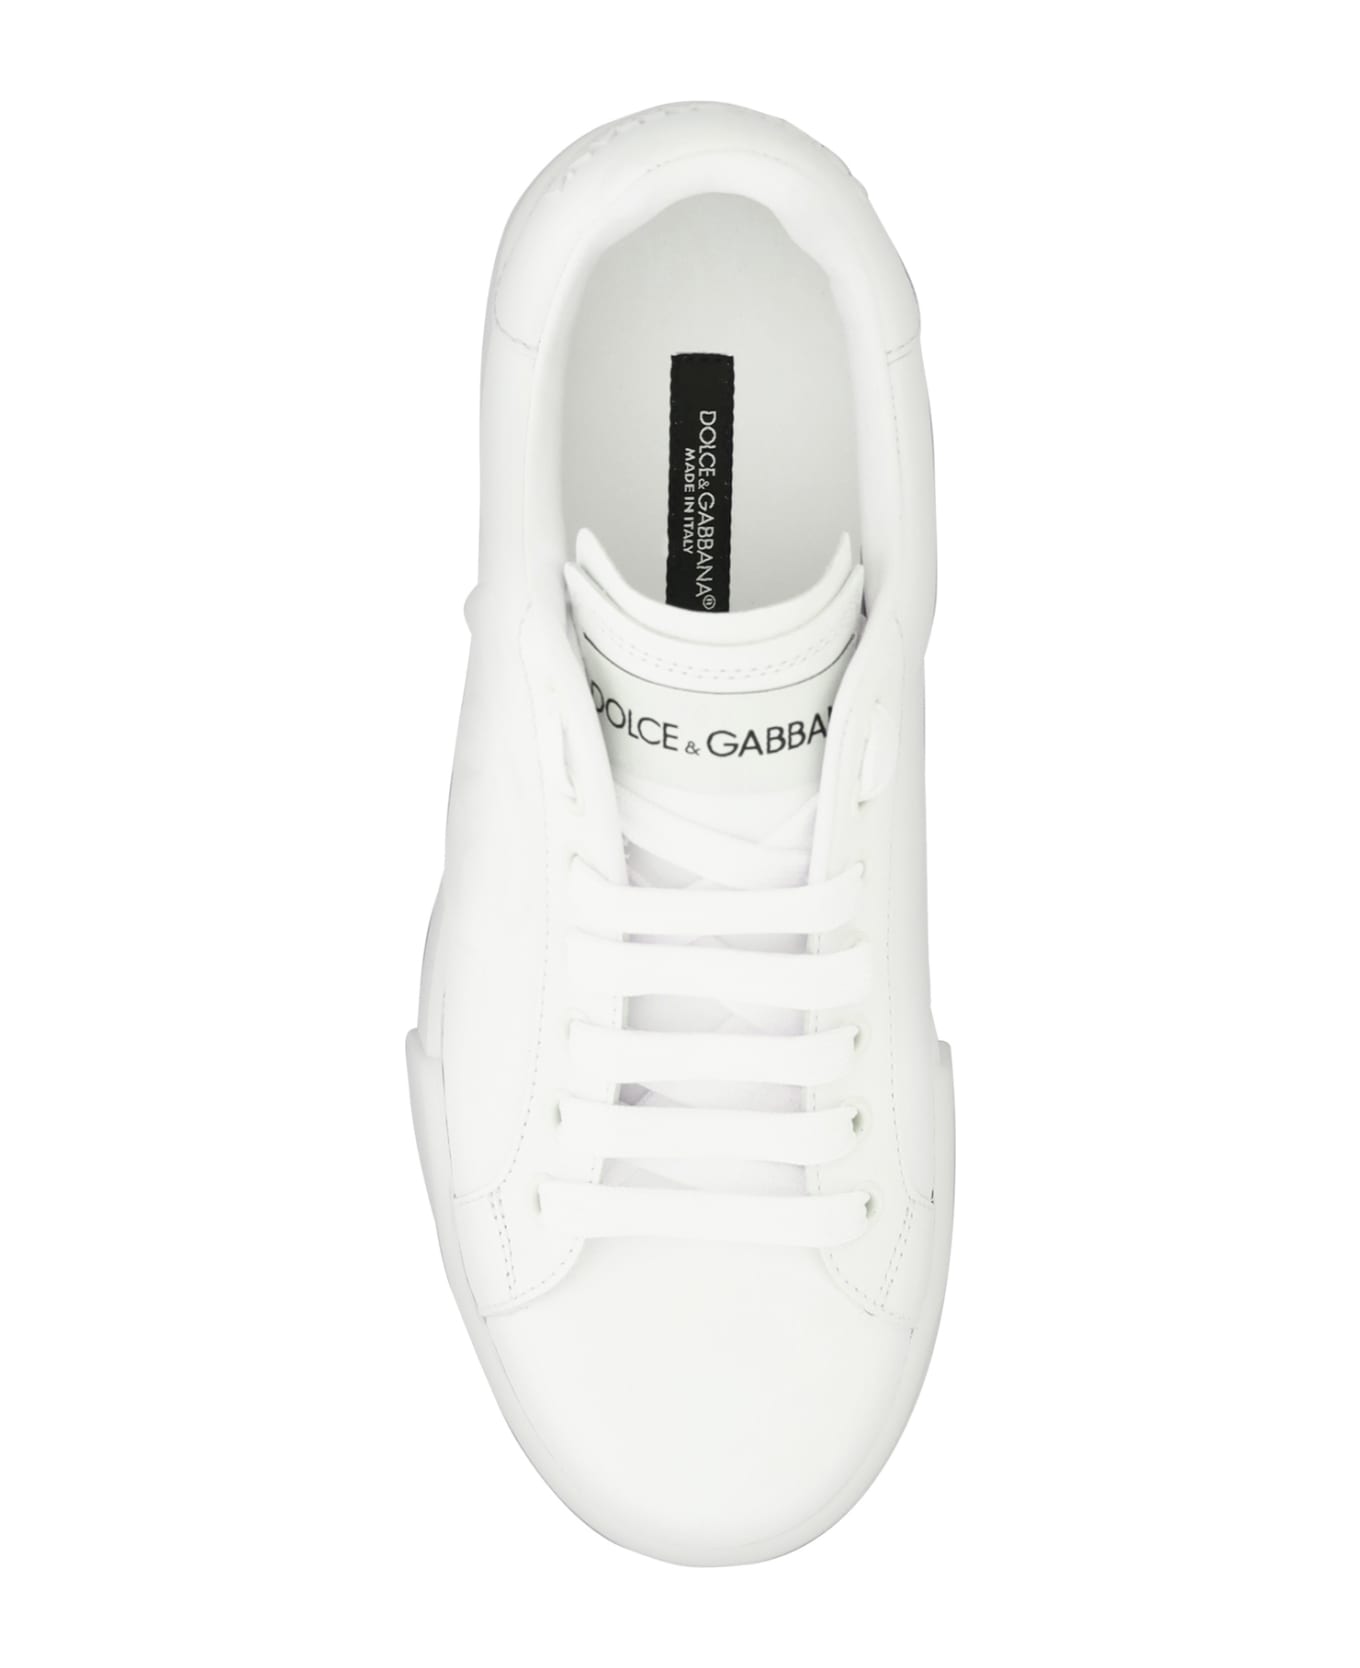 Dolce & Gabbana Portofino Sneakers - WHITE